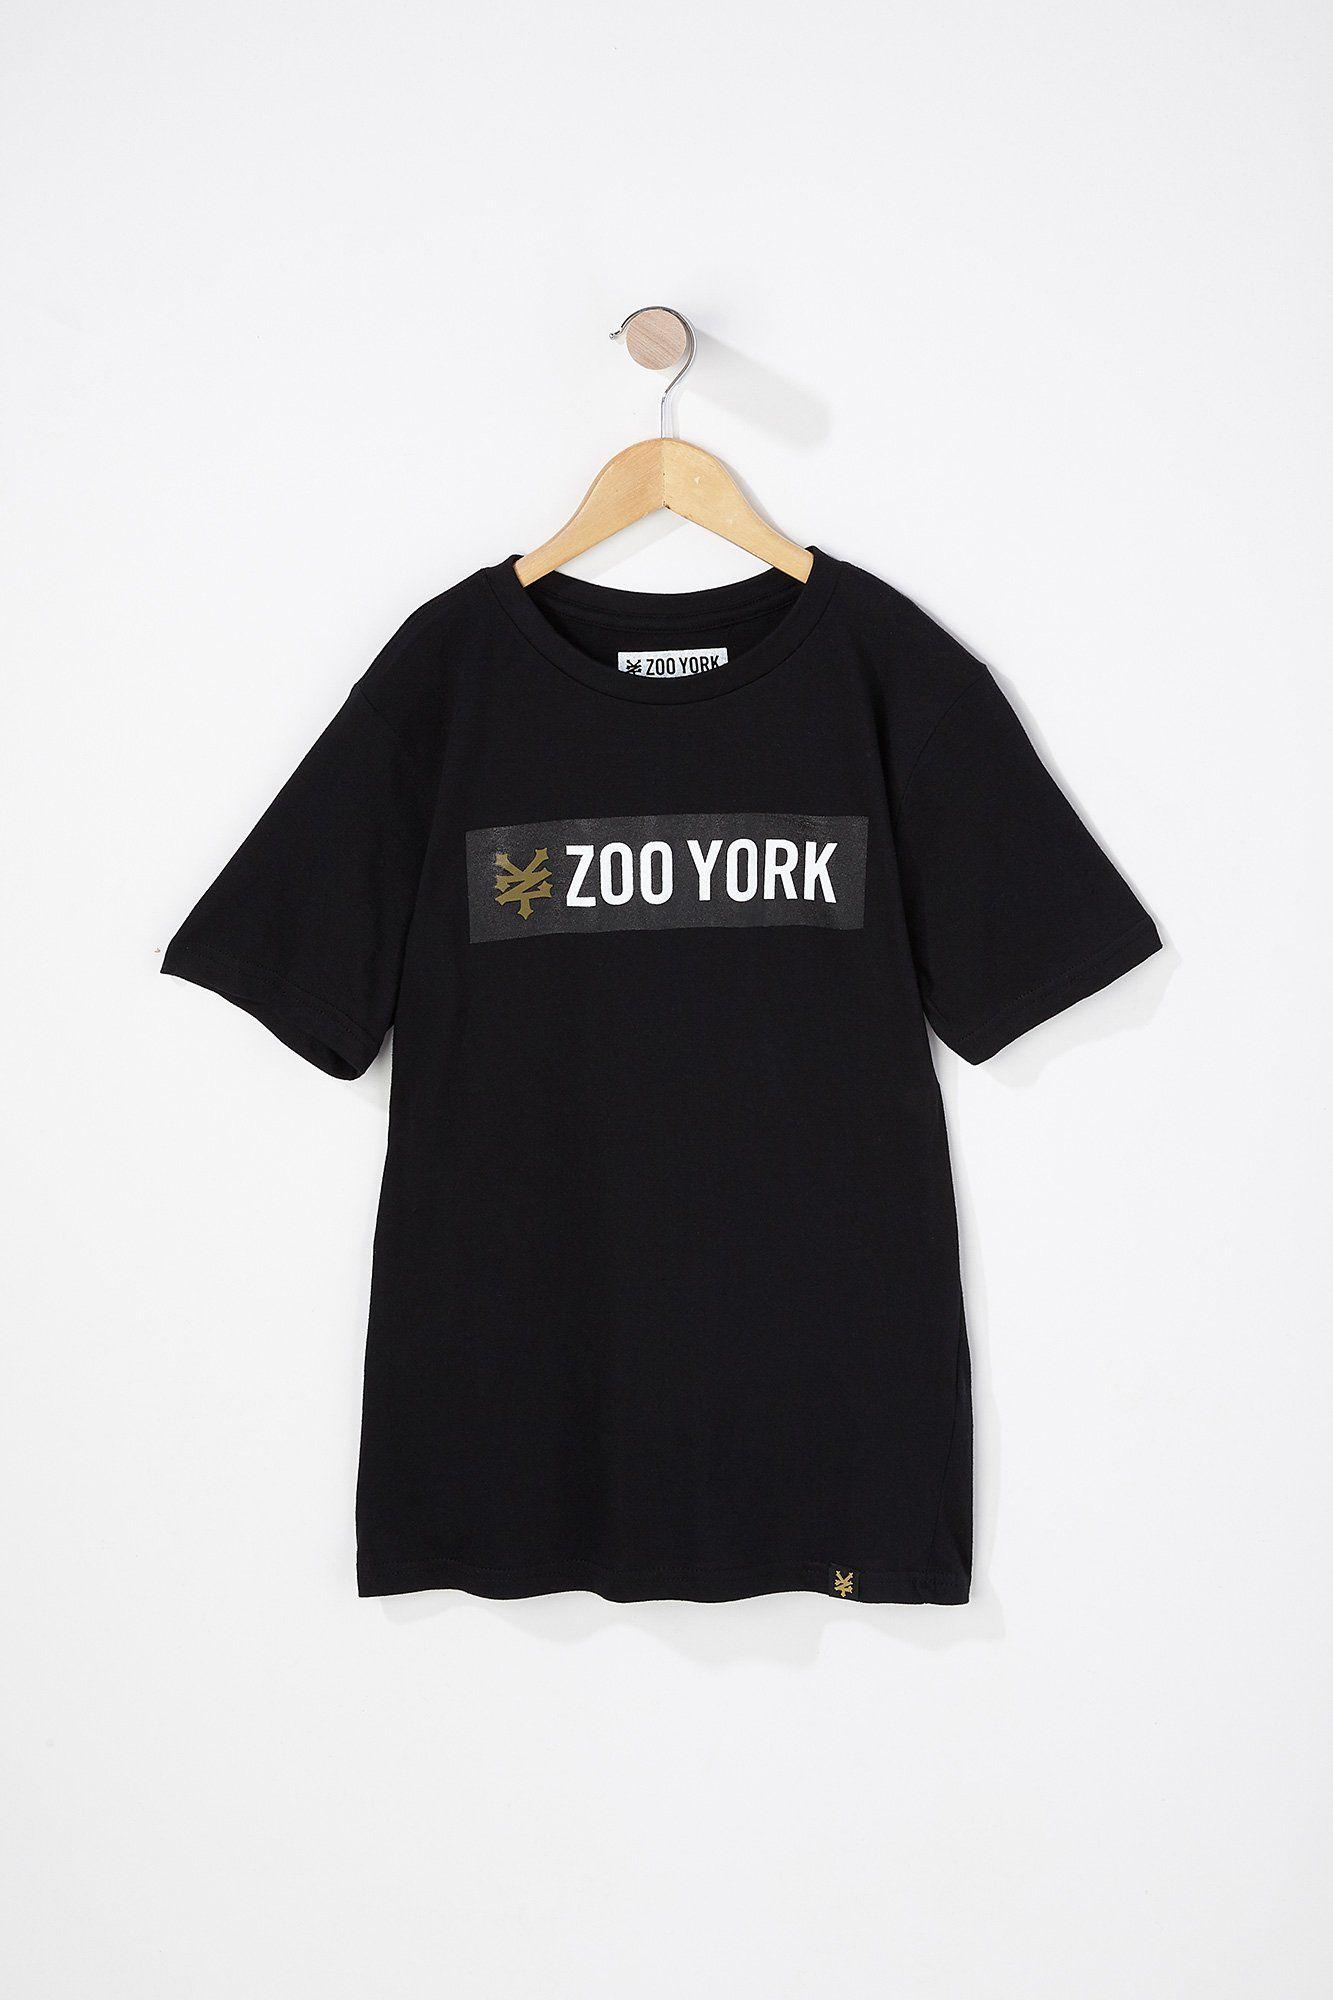 New Zoo York Logo - Zoo York Youth Logo Tee | West49